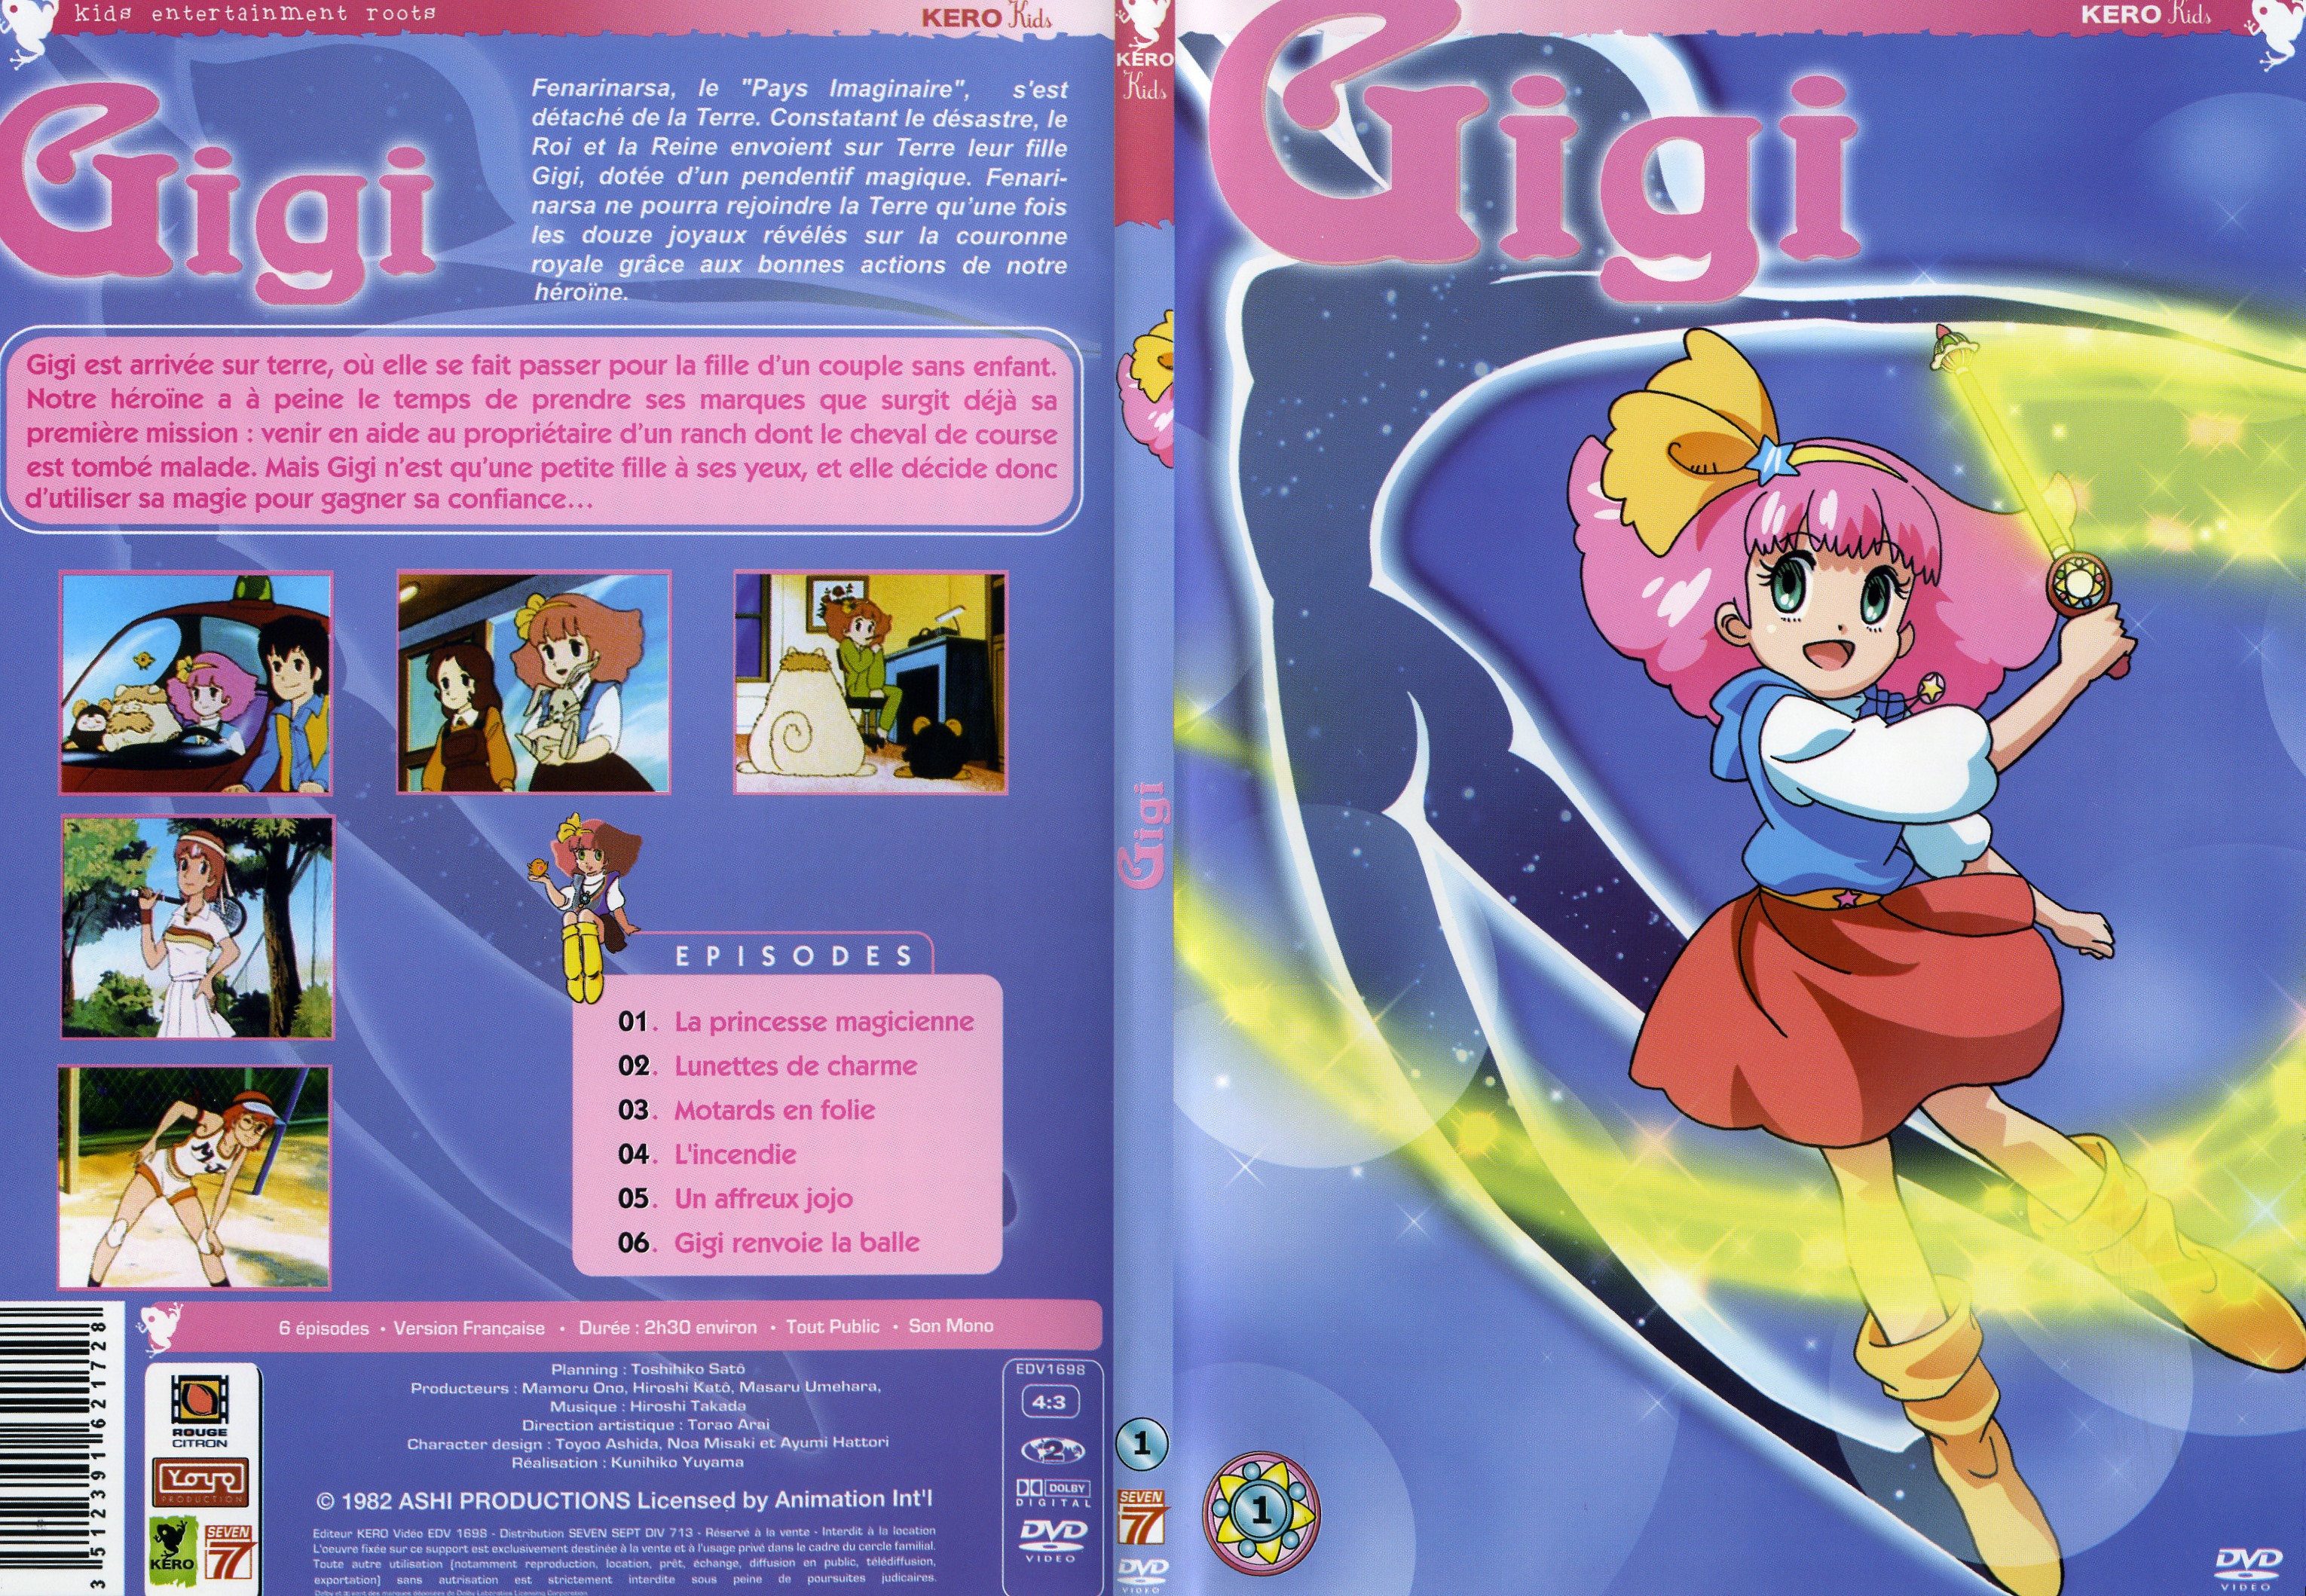 Jaquette DVD Gigi vol 1